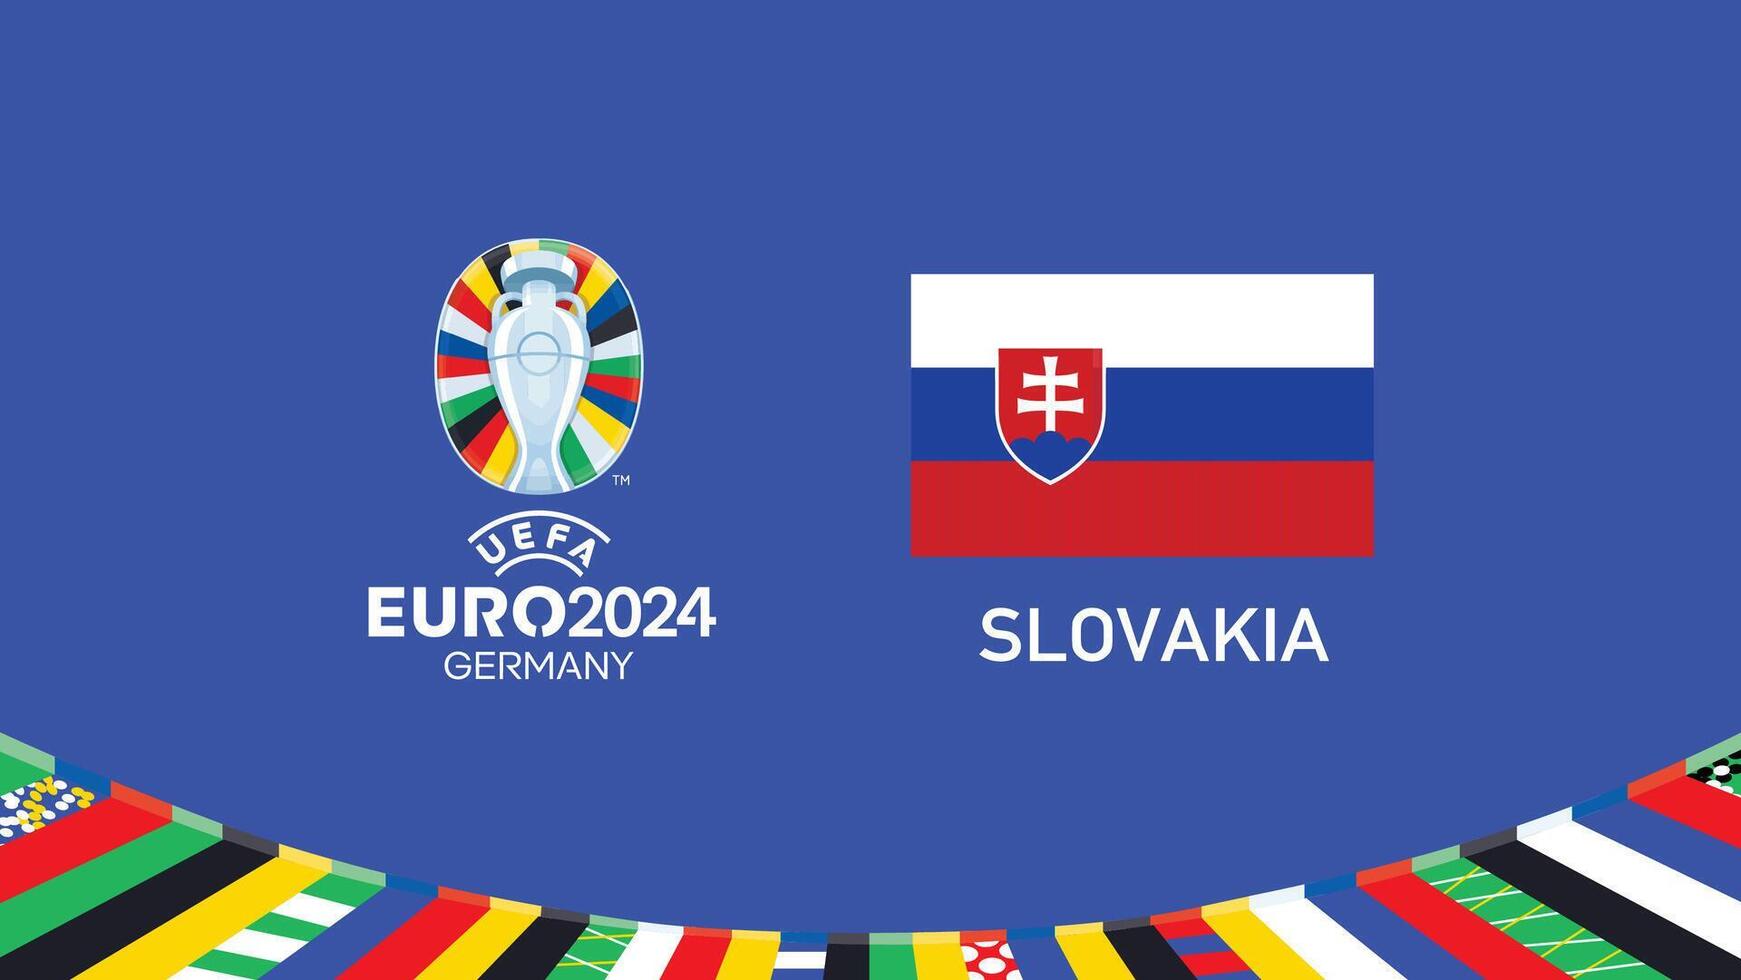 Euro 2024 Slovakia Emblem Flag Teams Design With Official Symbol Logo Abstract Countries European Football Illustration vector